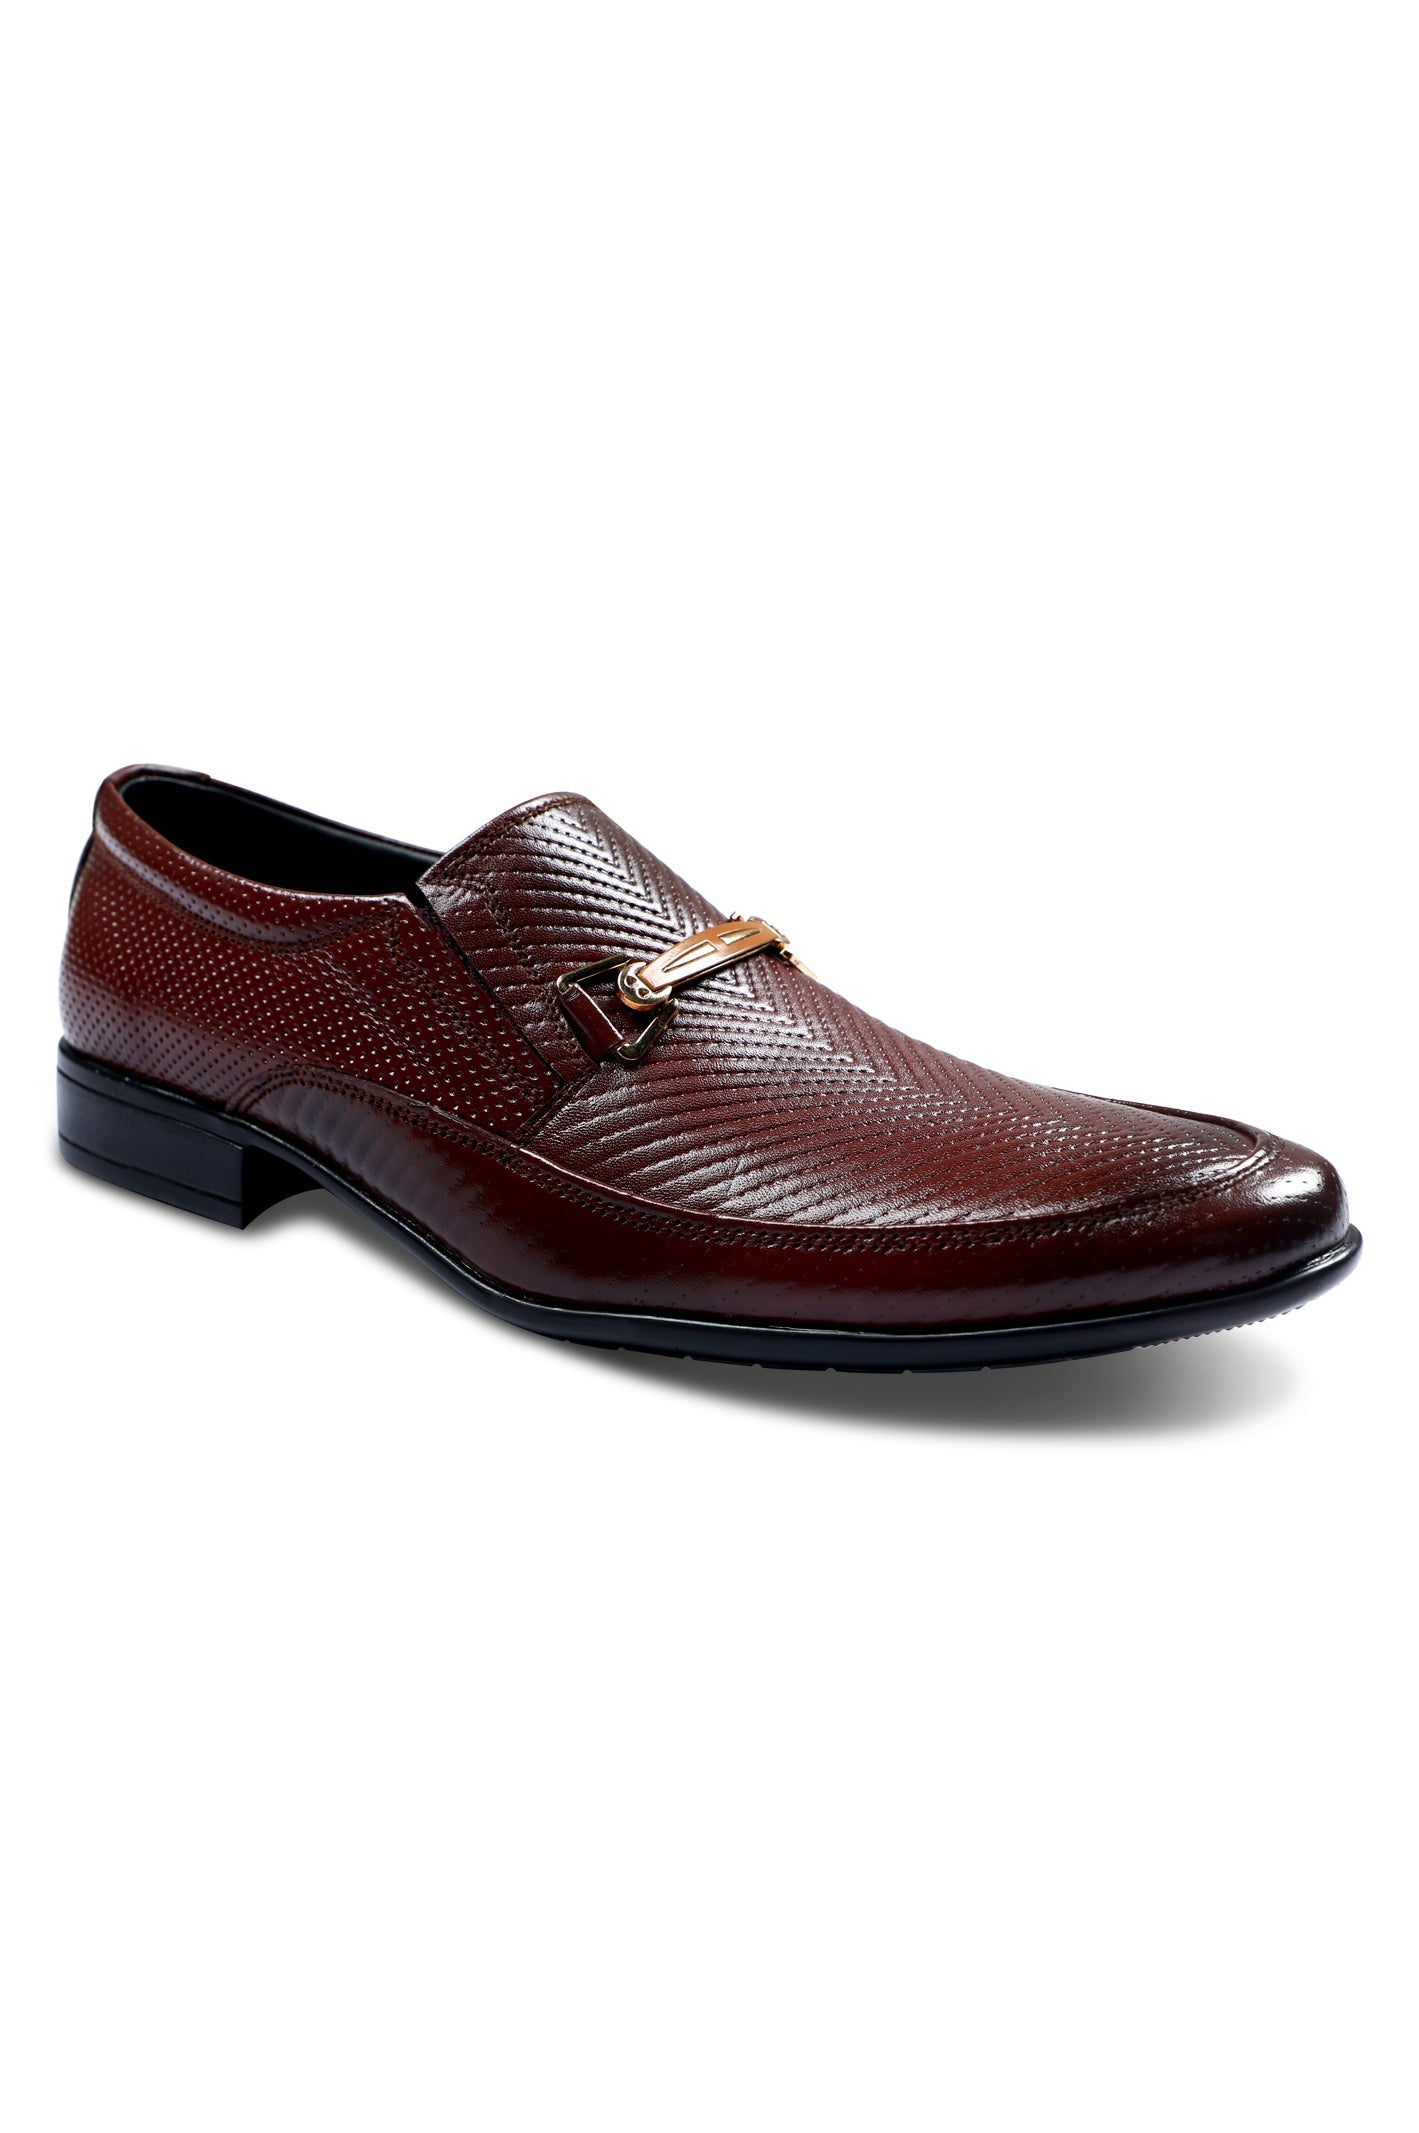 Formal Shoes For Men in Brown SKU: SMF-0188-BROWN - Diners